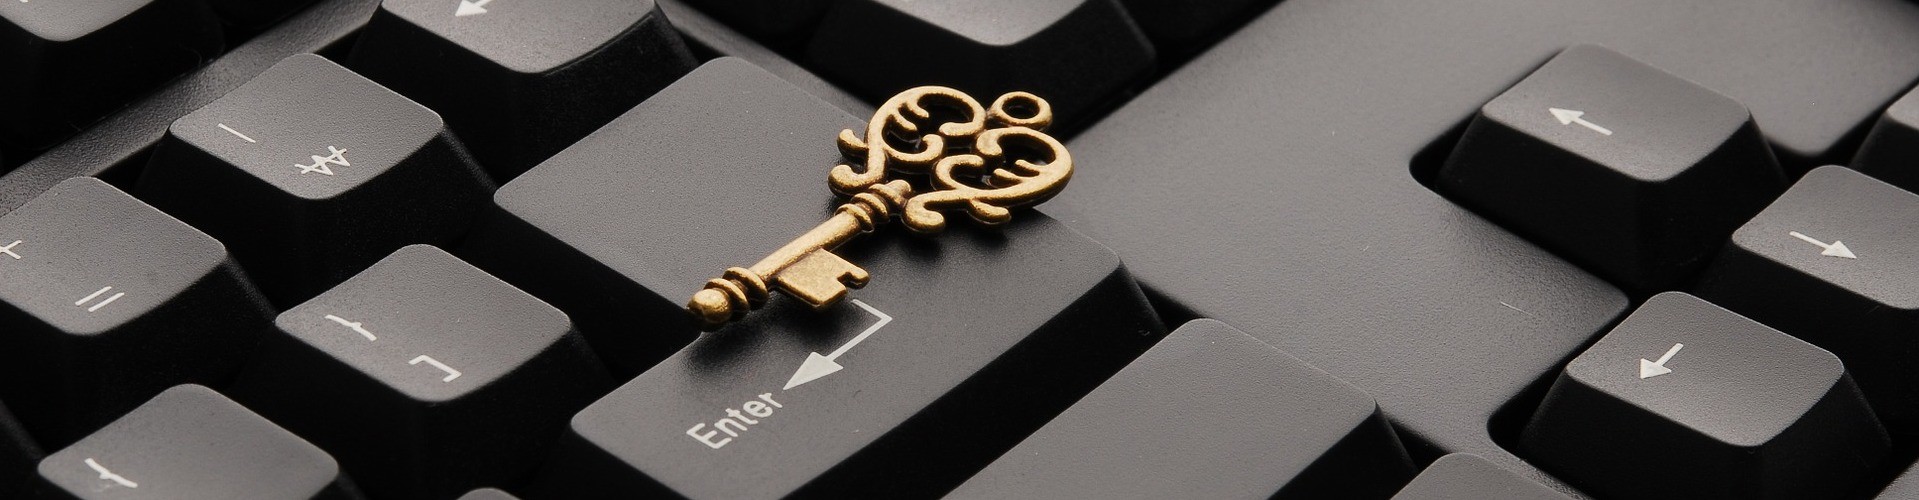 Image of a key on a Black Keyboard